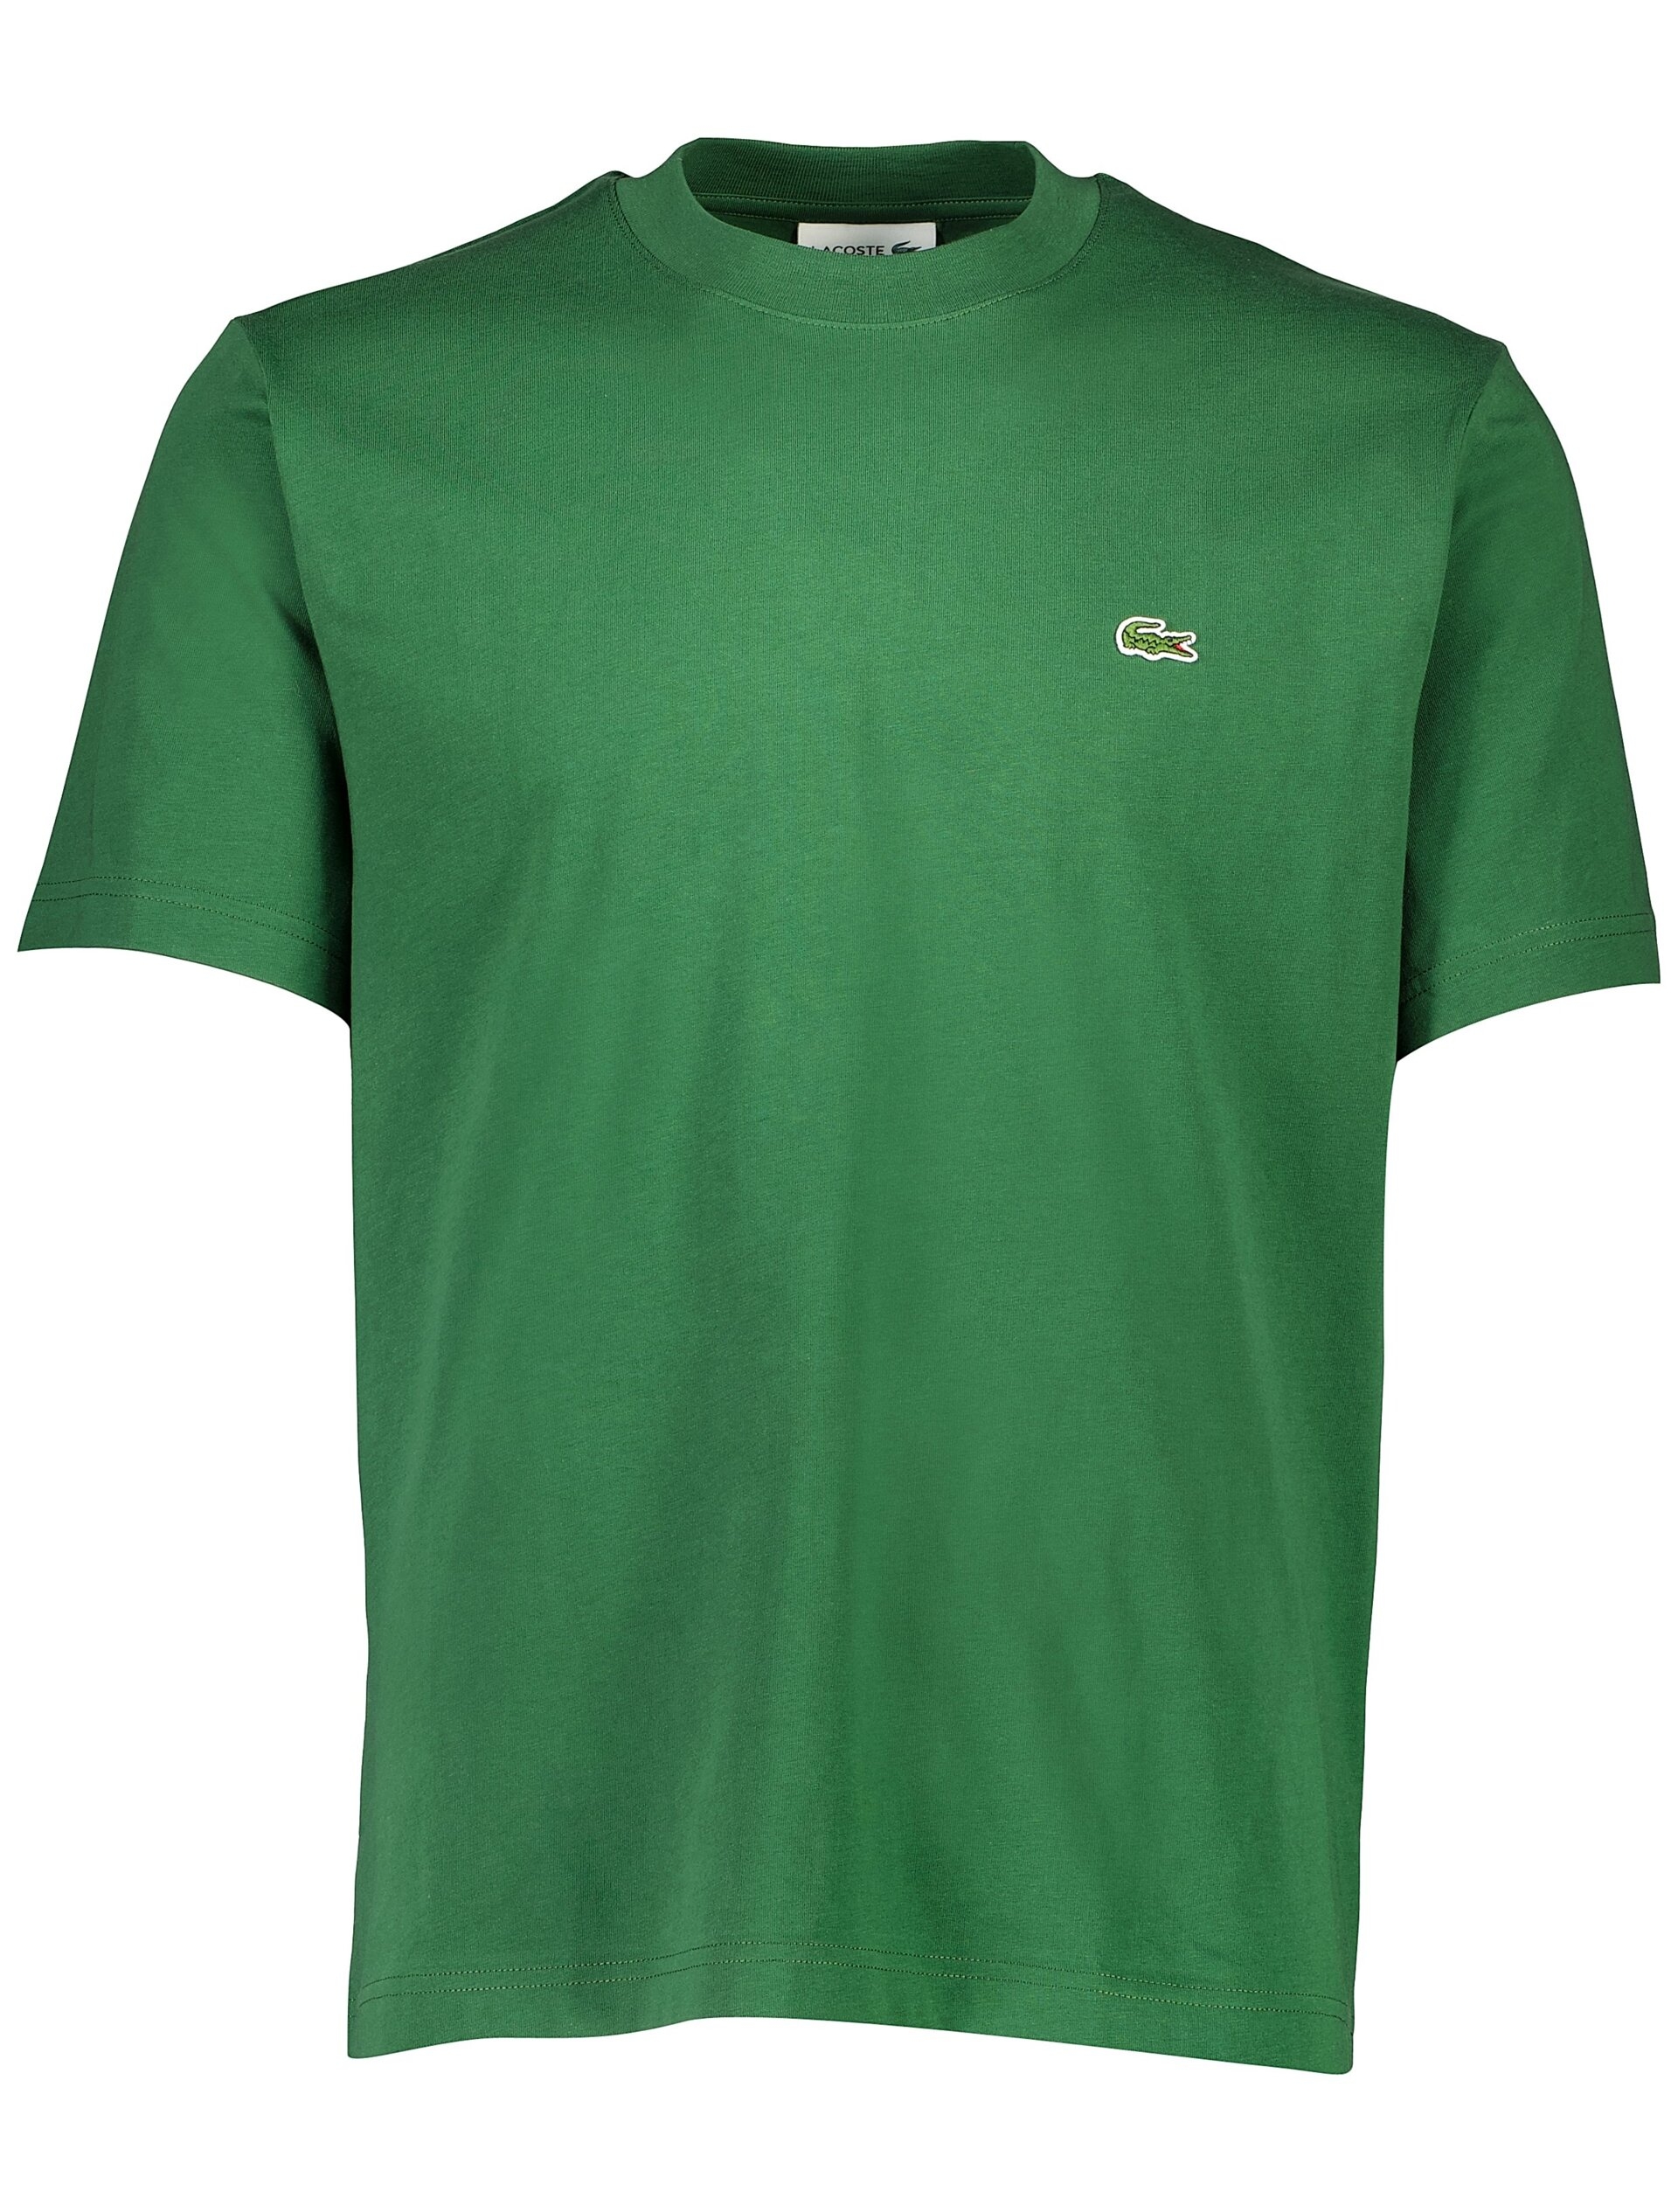 Lacoste T-shirt grøn / 132 green